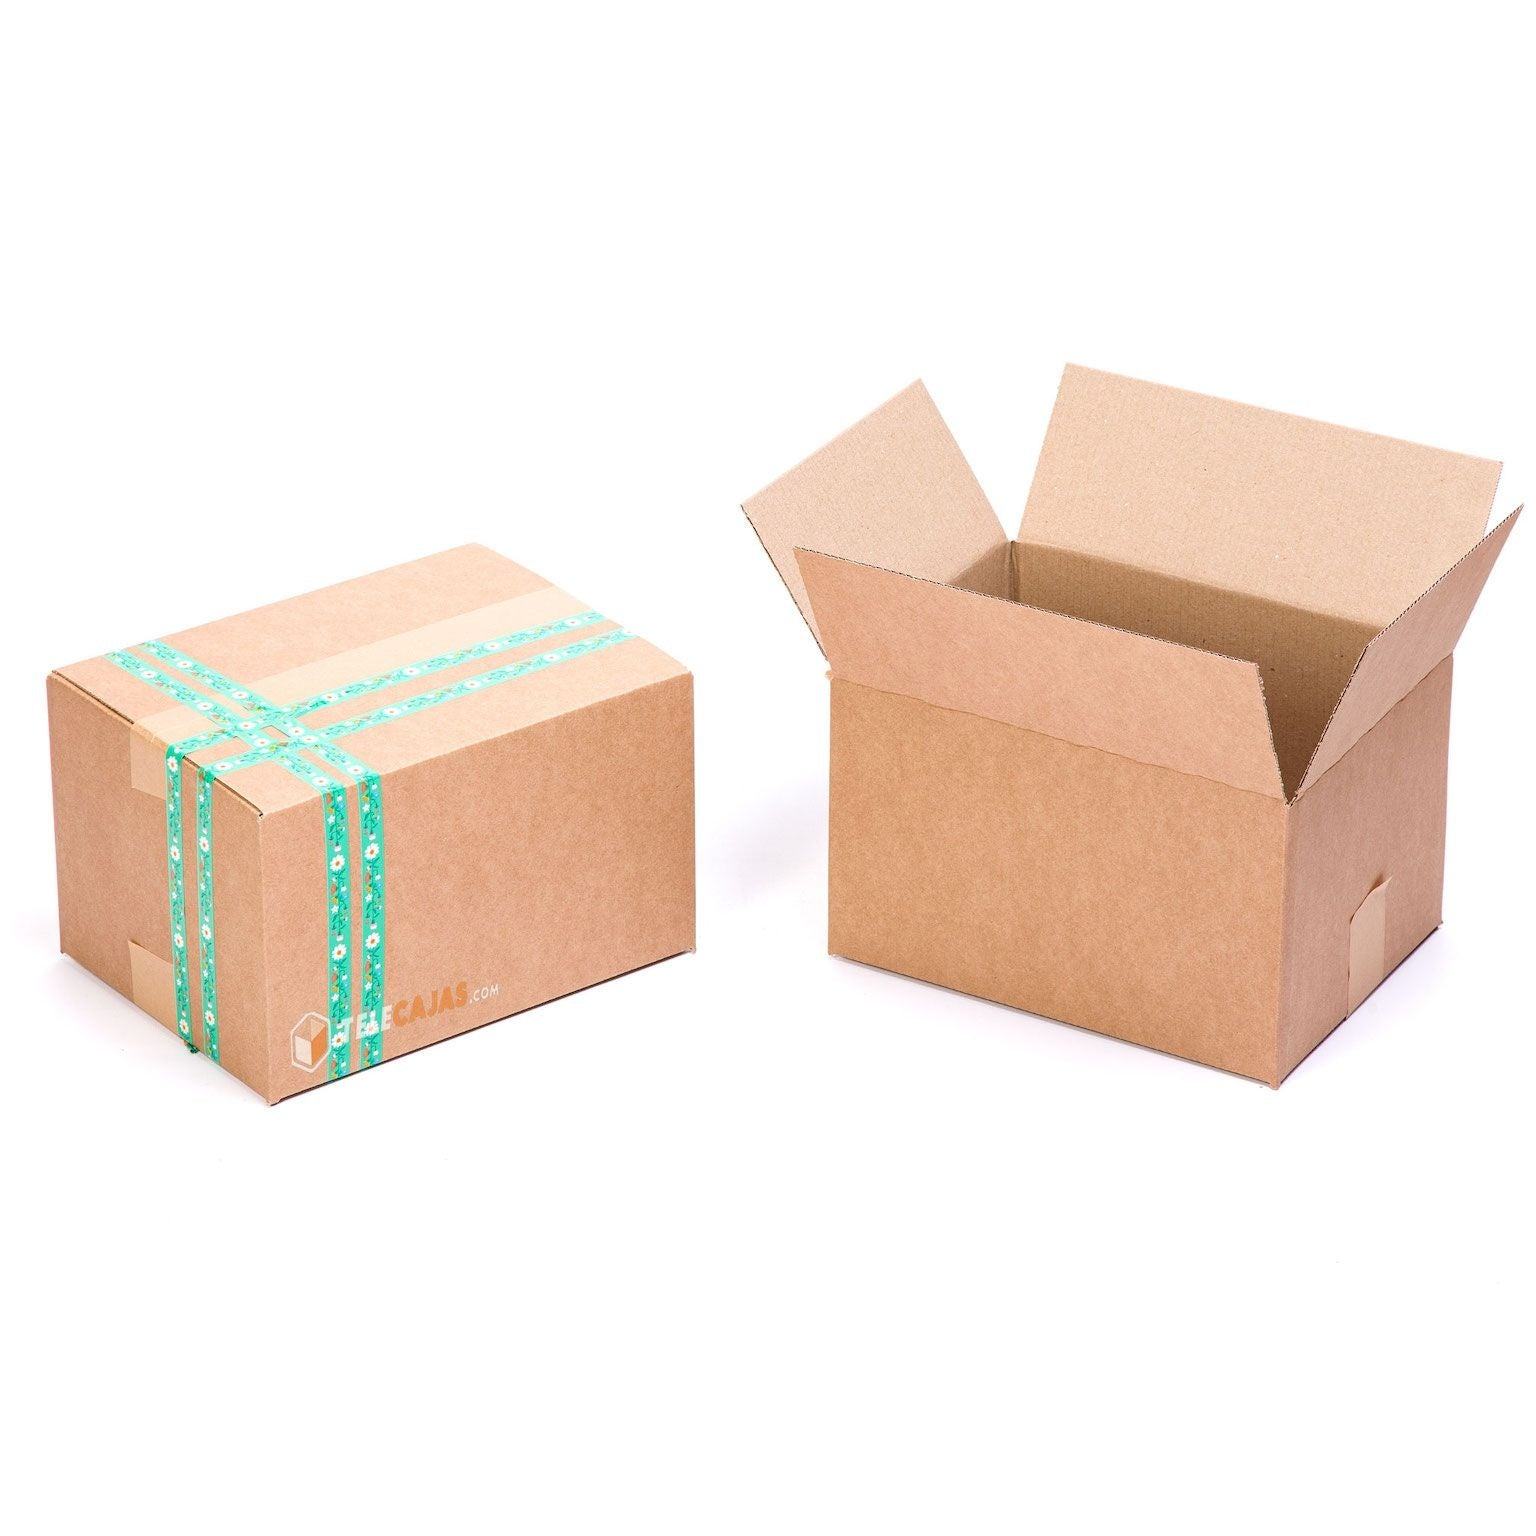 Caja Postal Envio paquetes pequena | DCBOX1220 | 305x228x183